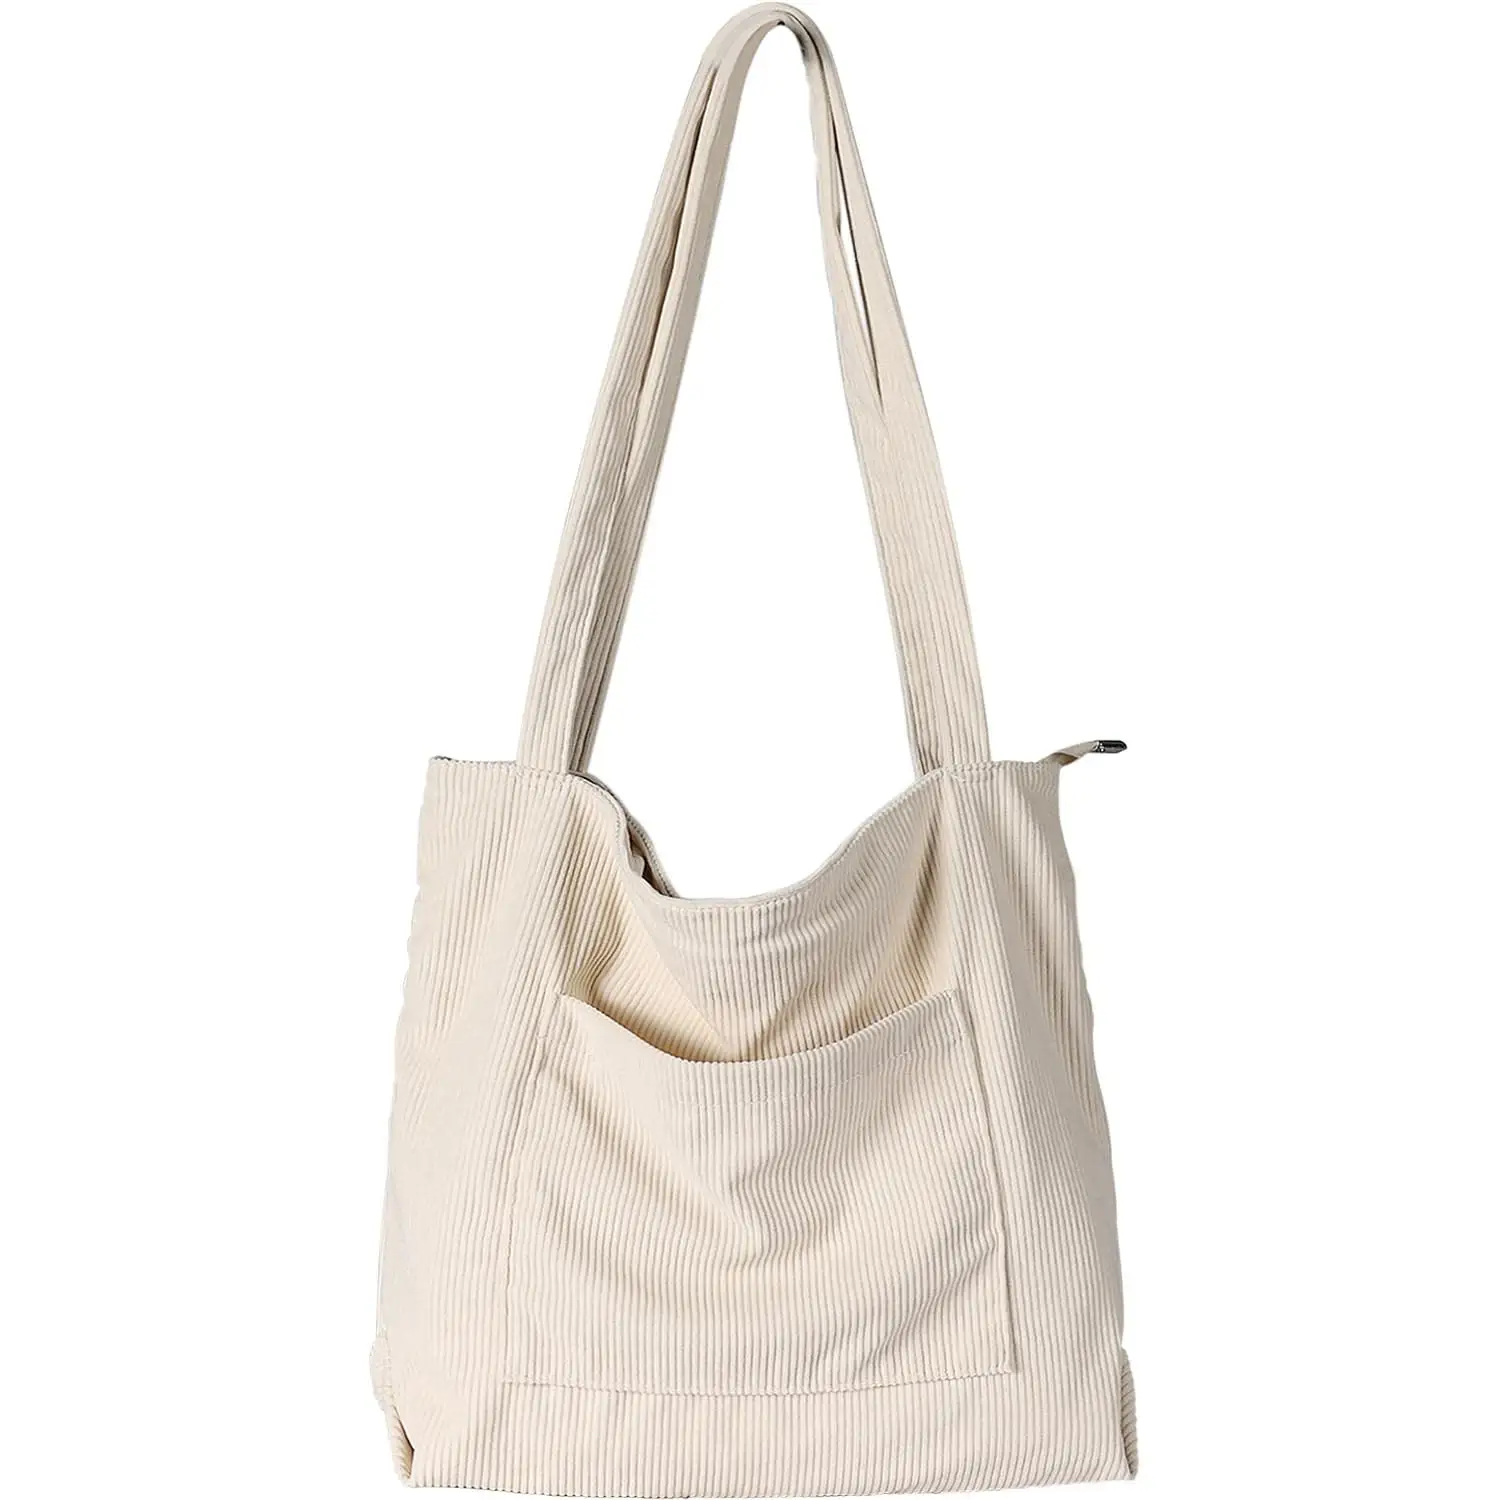 YILE Wholesale Custom Large Tote Bags Corduroy Beige Shoulder Hobo Bags Casual Handbags Big Capacity Shopping Work Bag